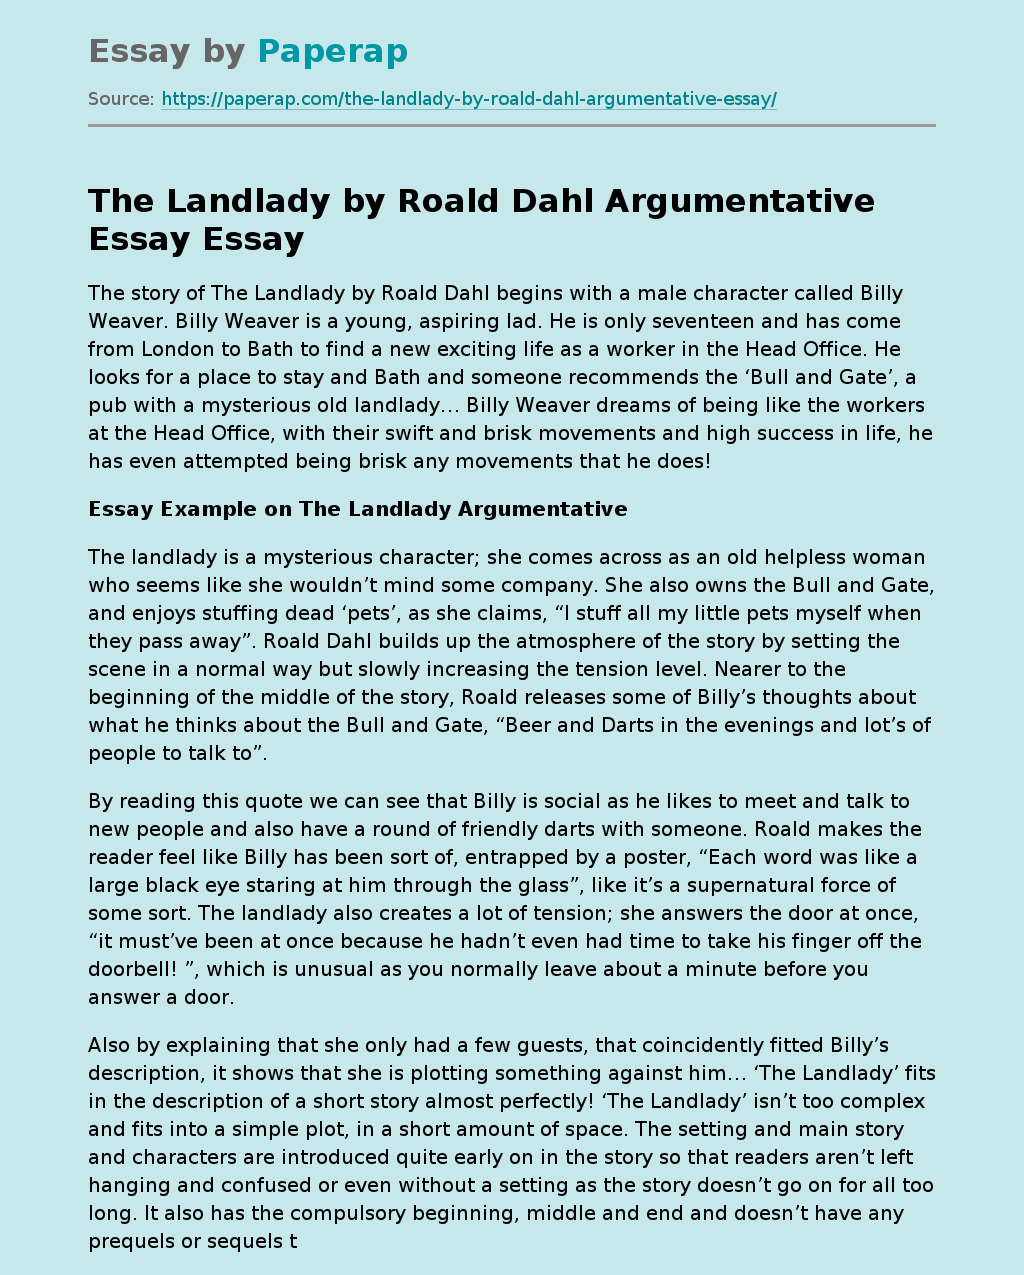 The Landlady by Roald Dahl Argumentative Essay